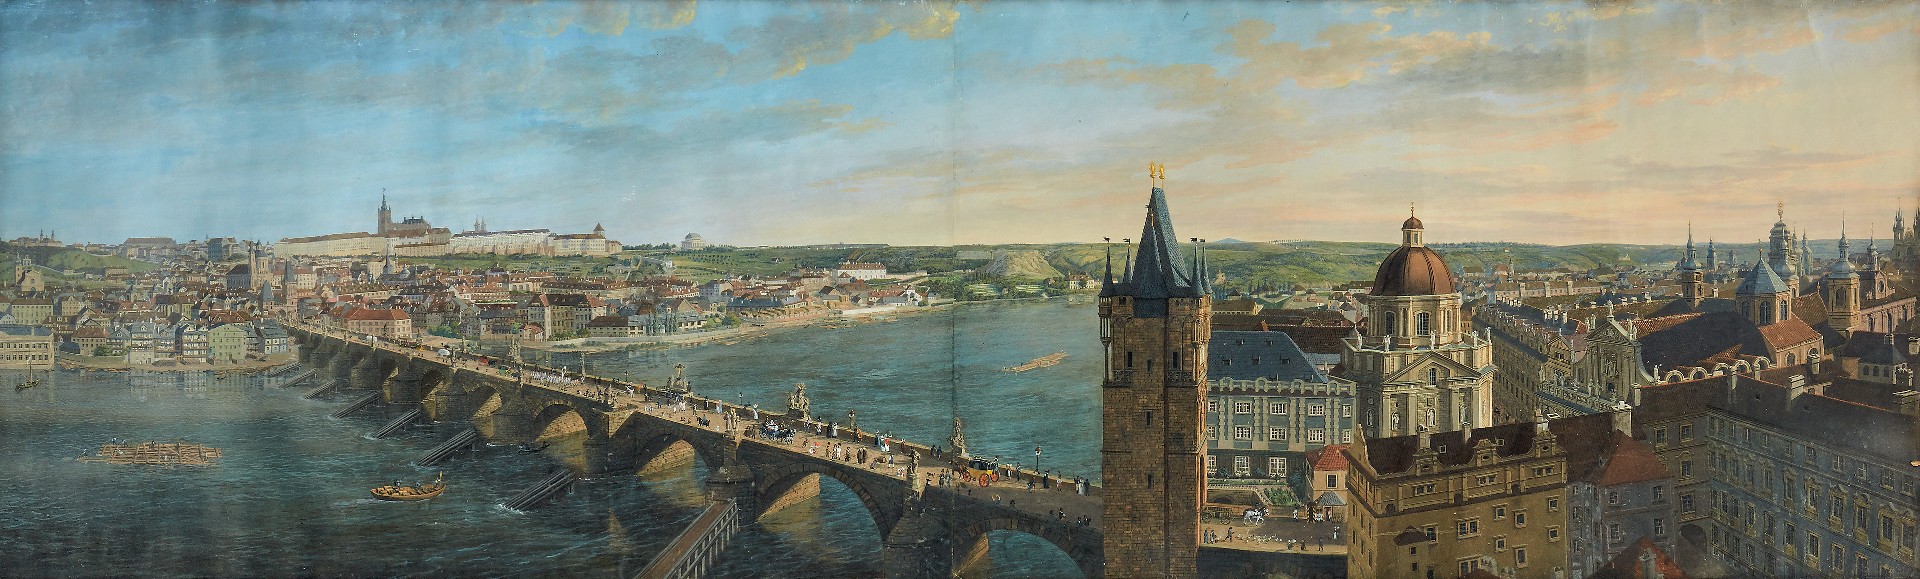 Christian Ezdorf: Panoramatický polled na Prahu, 1821, kvaš na papíře, 75 x 245 cm, cena: 1 350 000 SEK (+ poplatky) Uppsala Auktionskammare 10. 12. 2020